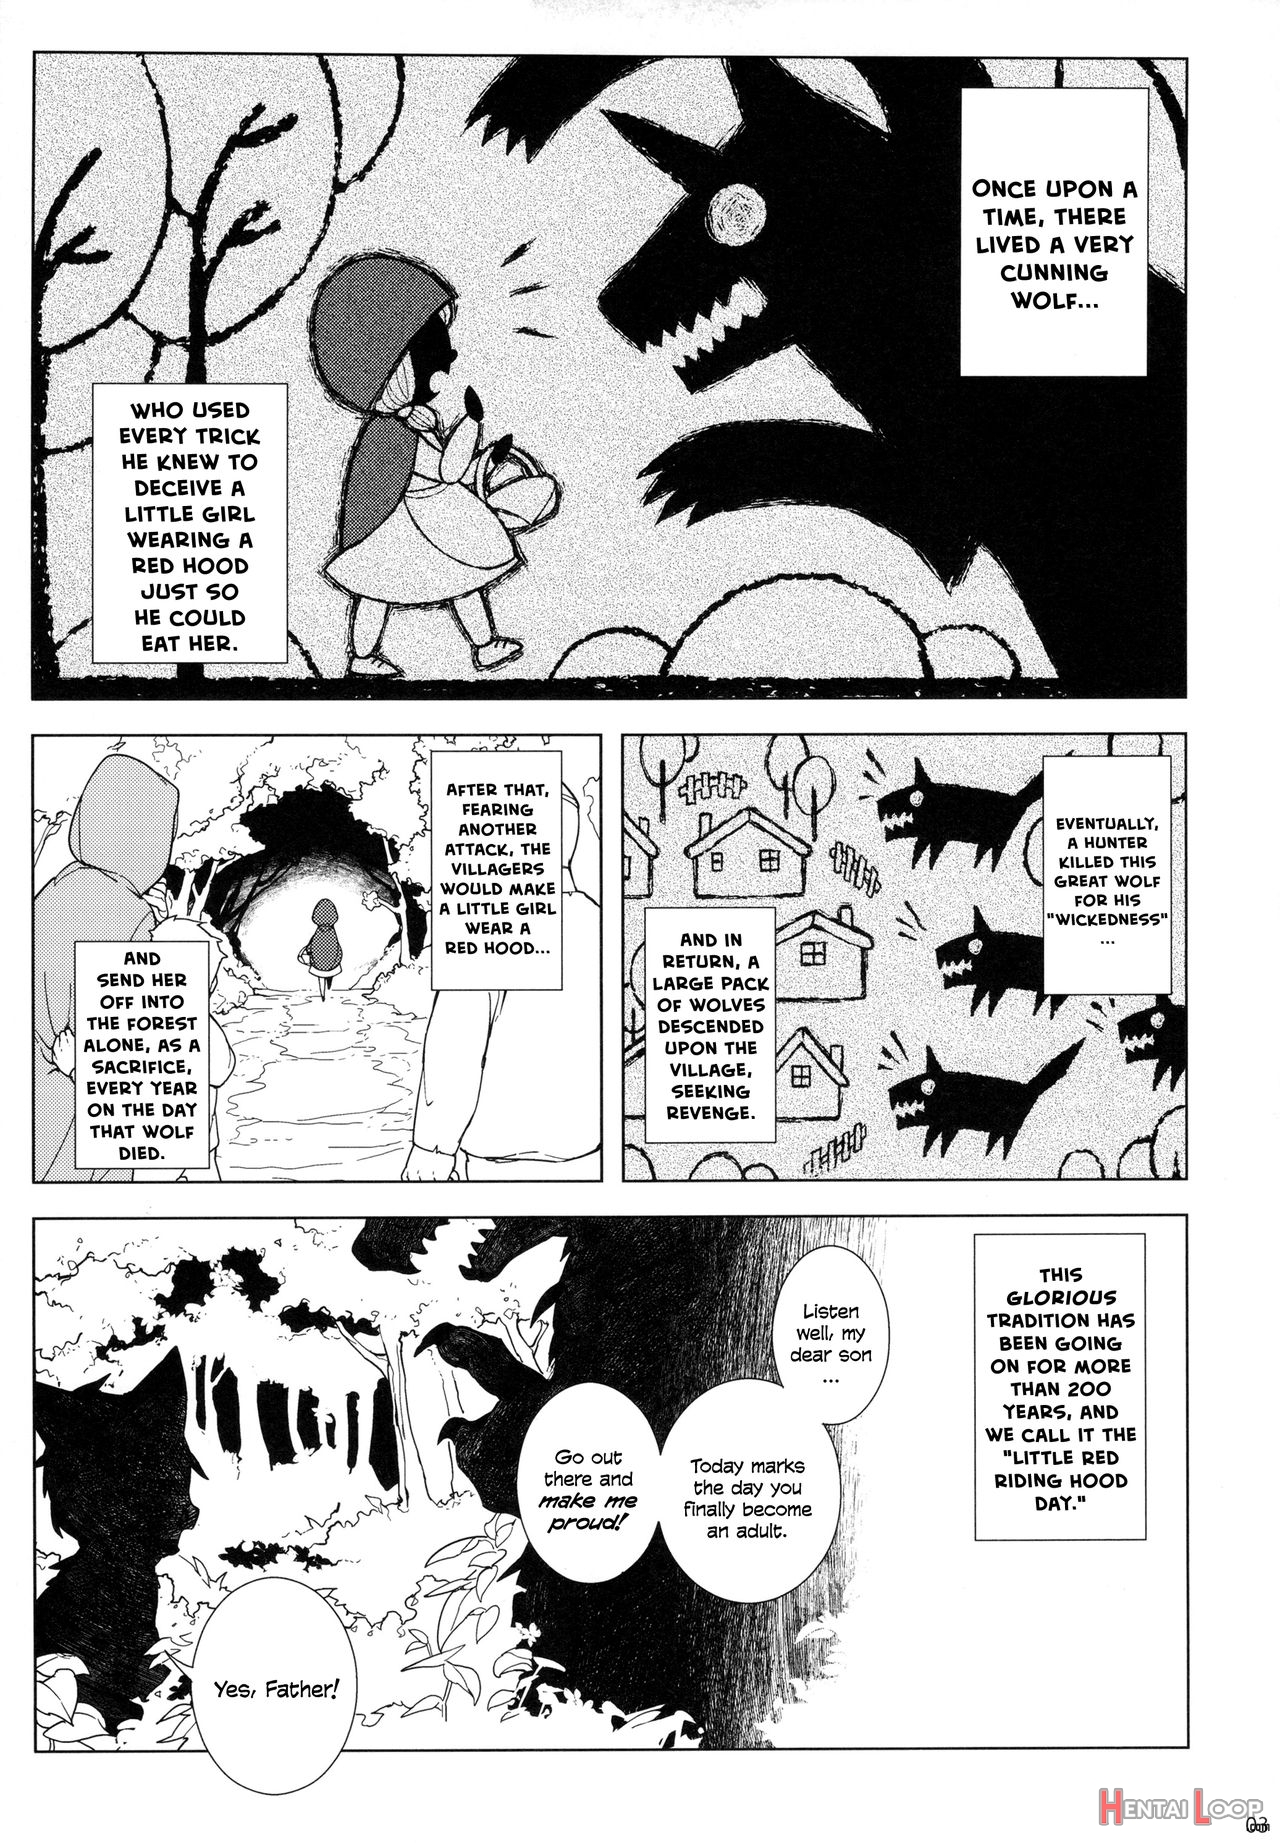 Dounen Hakai ~ookina Akazukin & Chiisaki Ookami~ English] page 4